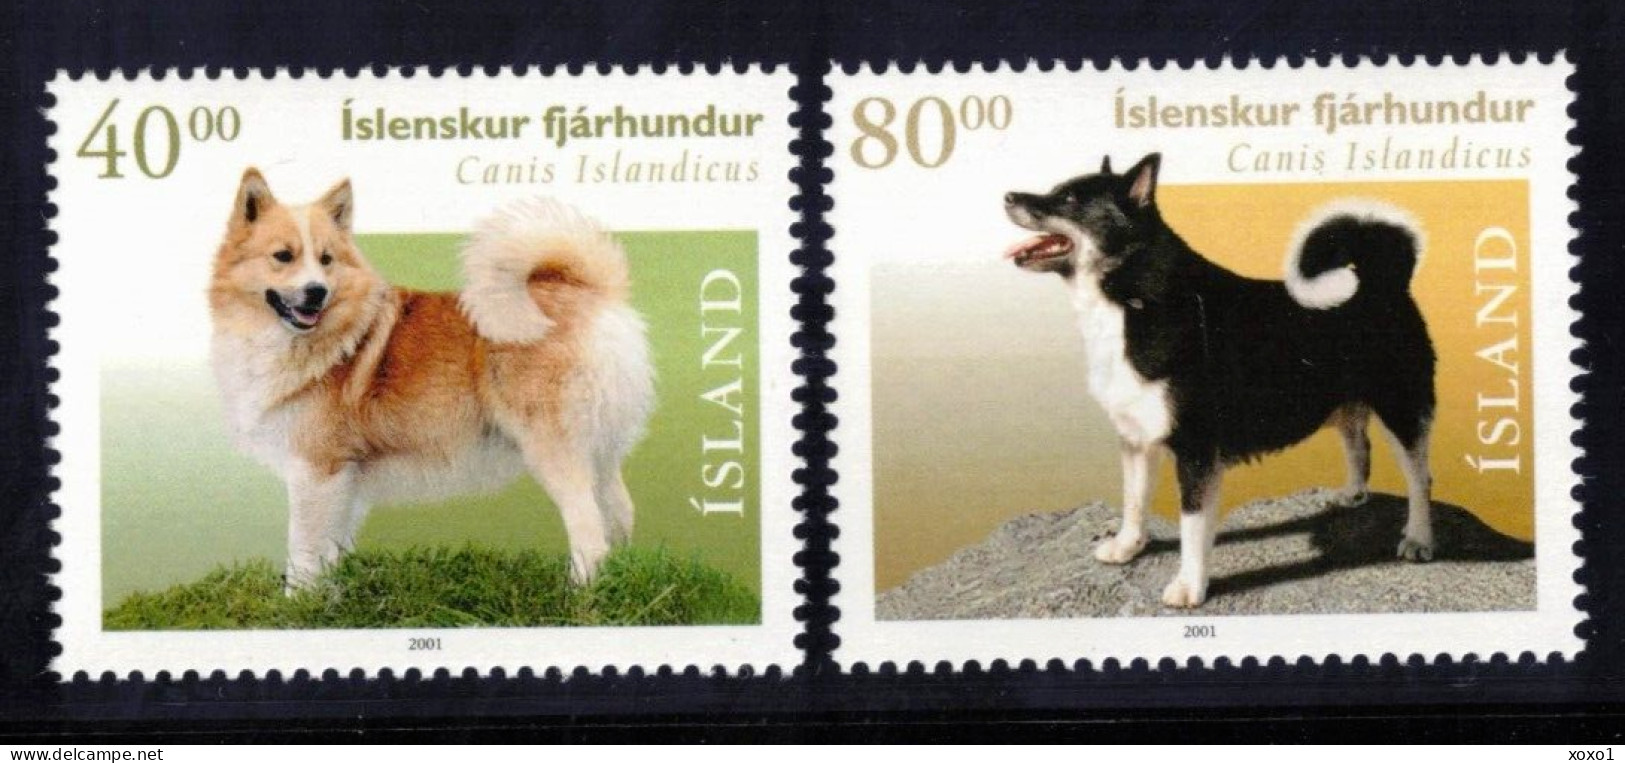 Iceland 2001 MiNr. 977 - 978 Island Mammals, Pets, Dogs, Icelandic Spitz 2v MNH** 4.00 € - Chiens